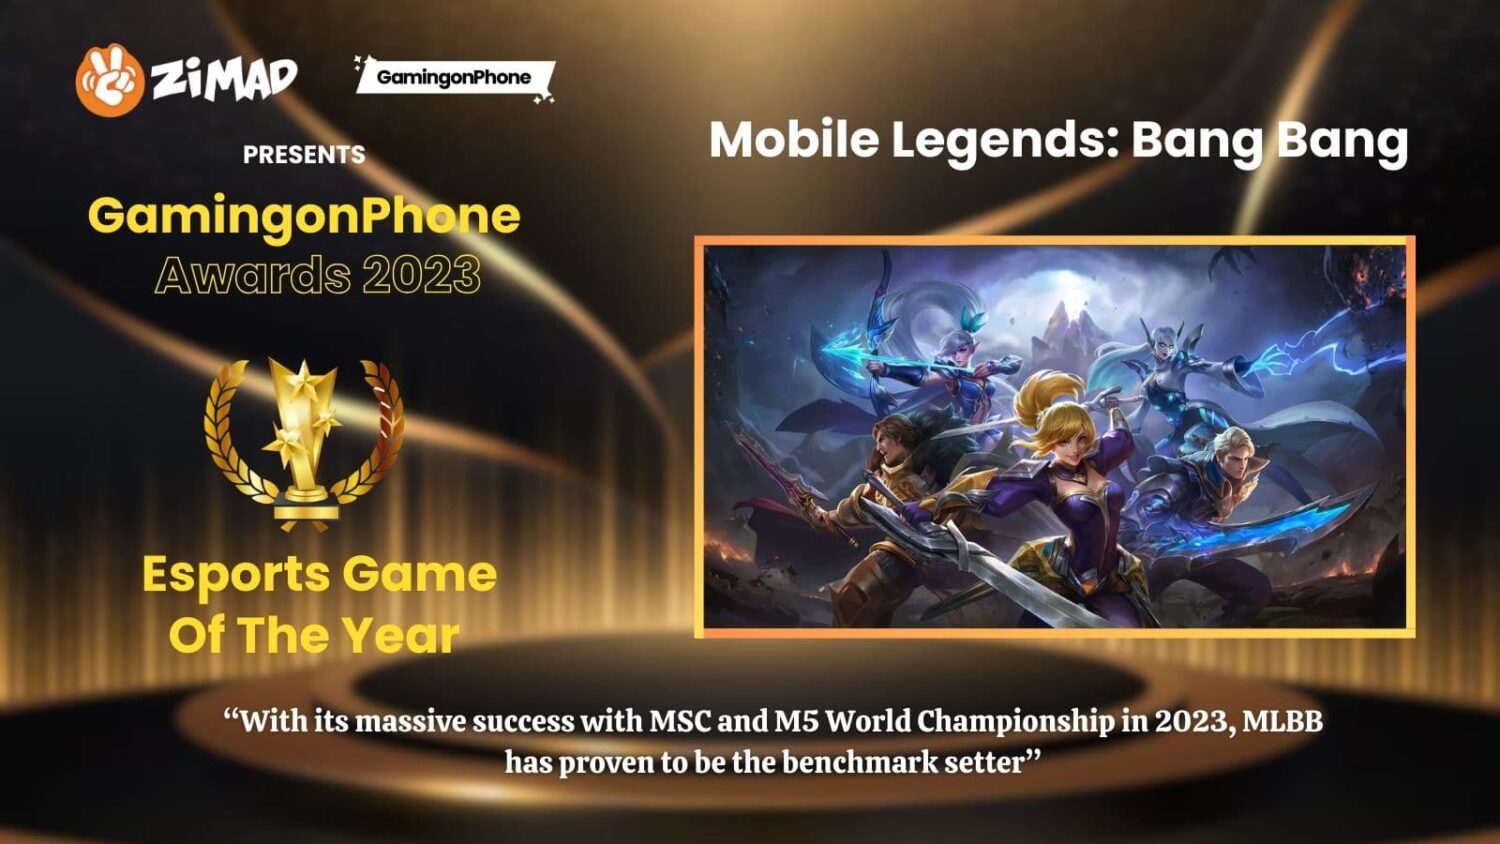 Best mobile esports game 2023, gamingonphone awards 2023